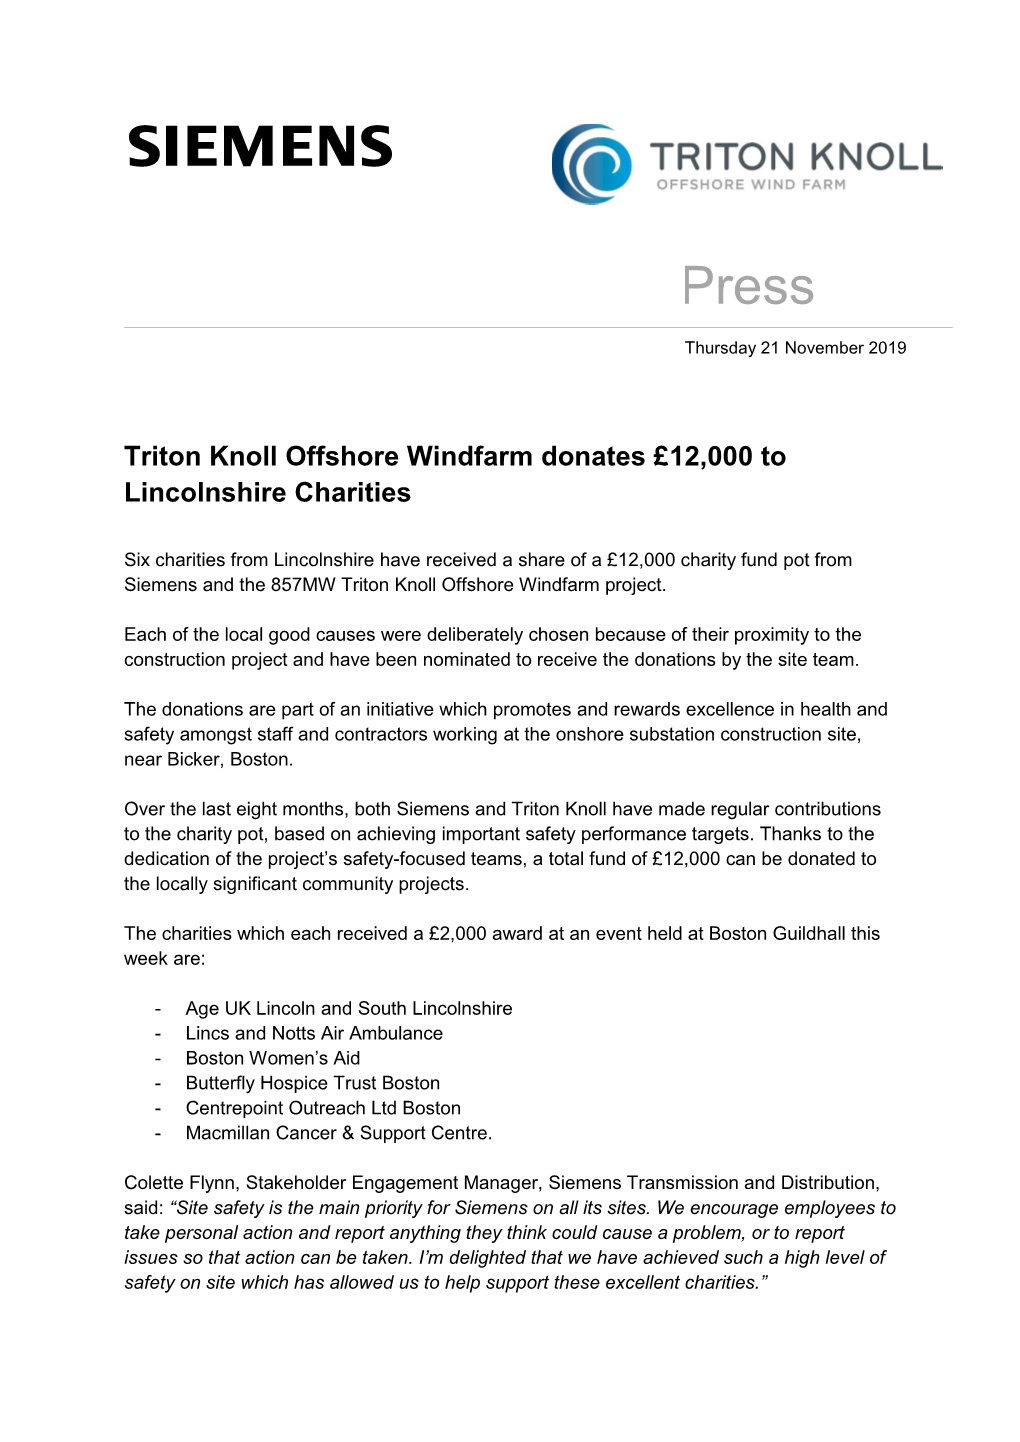 11/2019: Triton Knoll Offshore Windfarm Donates £12000 to Lincolnshire Charities